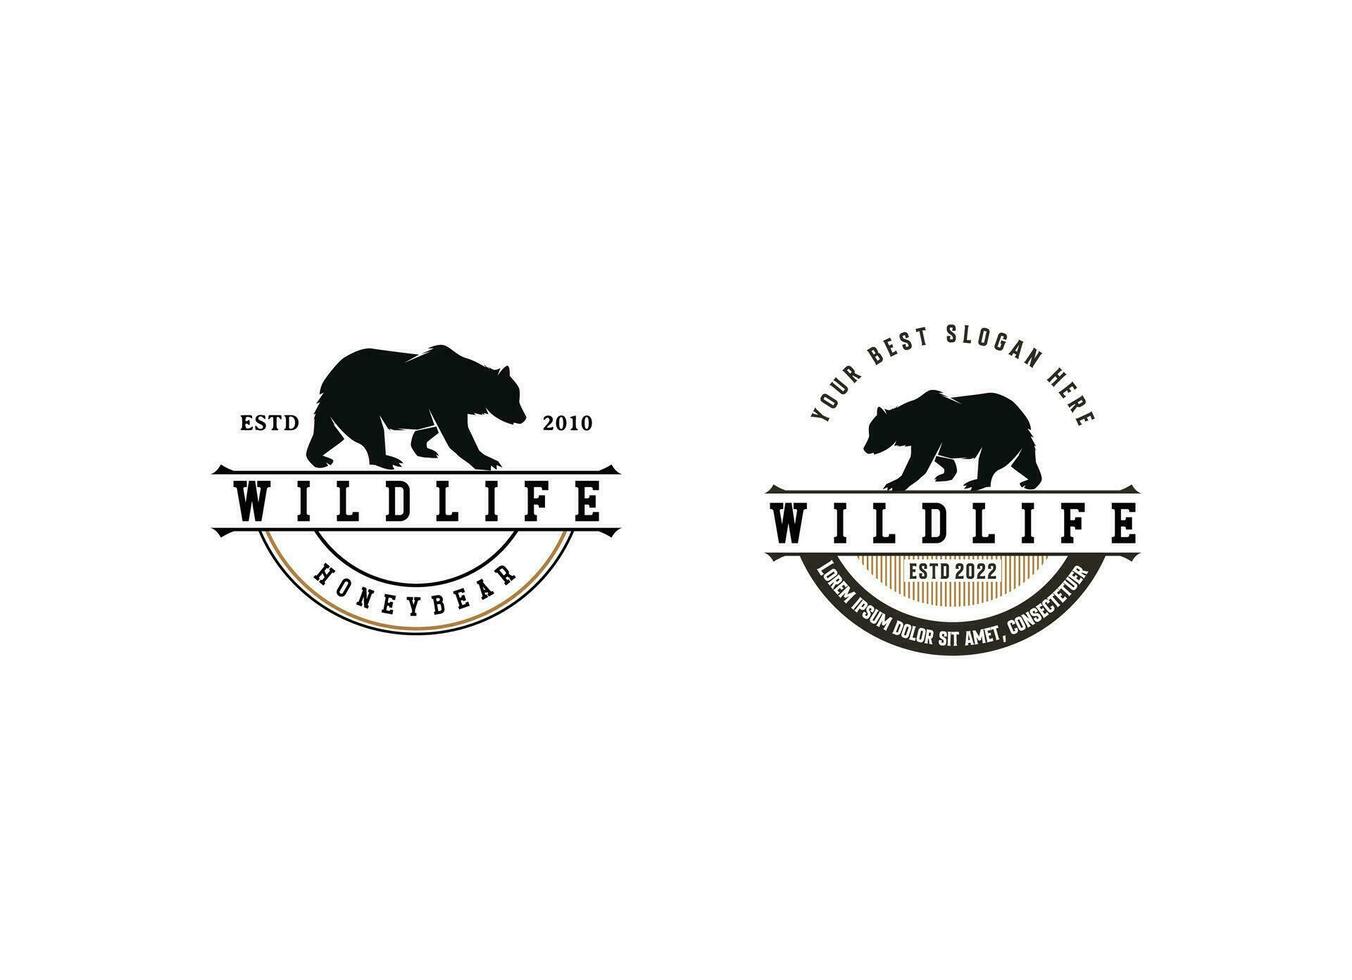 Vintage wildlife of bear logo. Bear hunting logo design vector